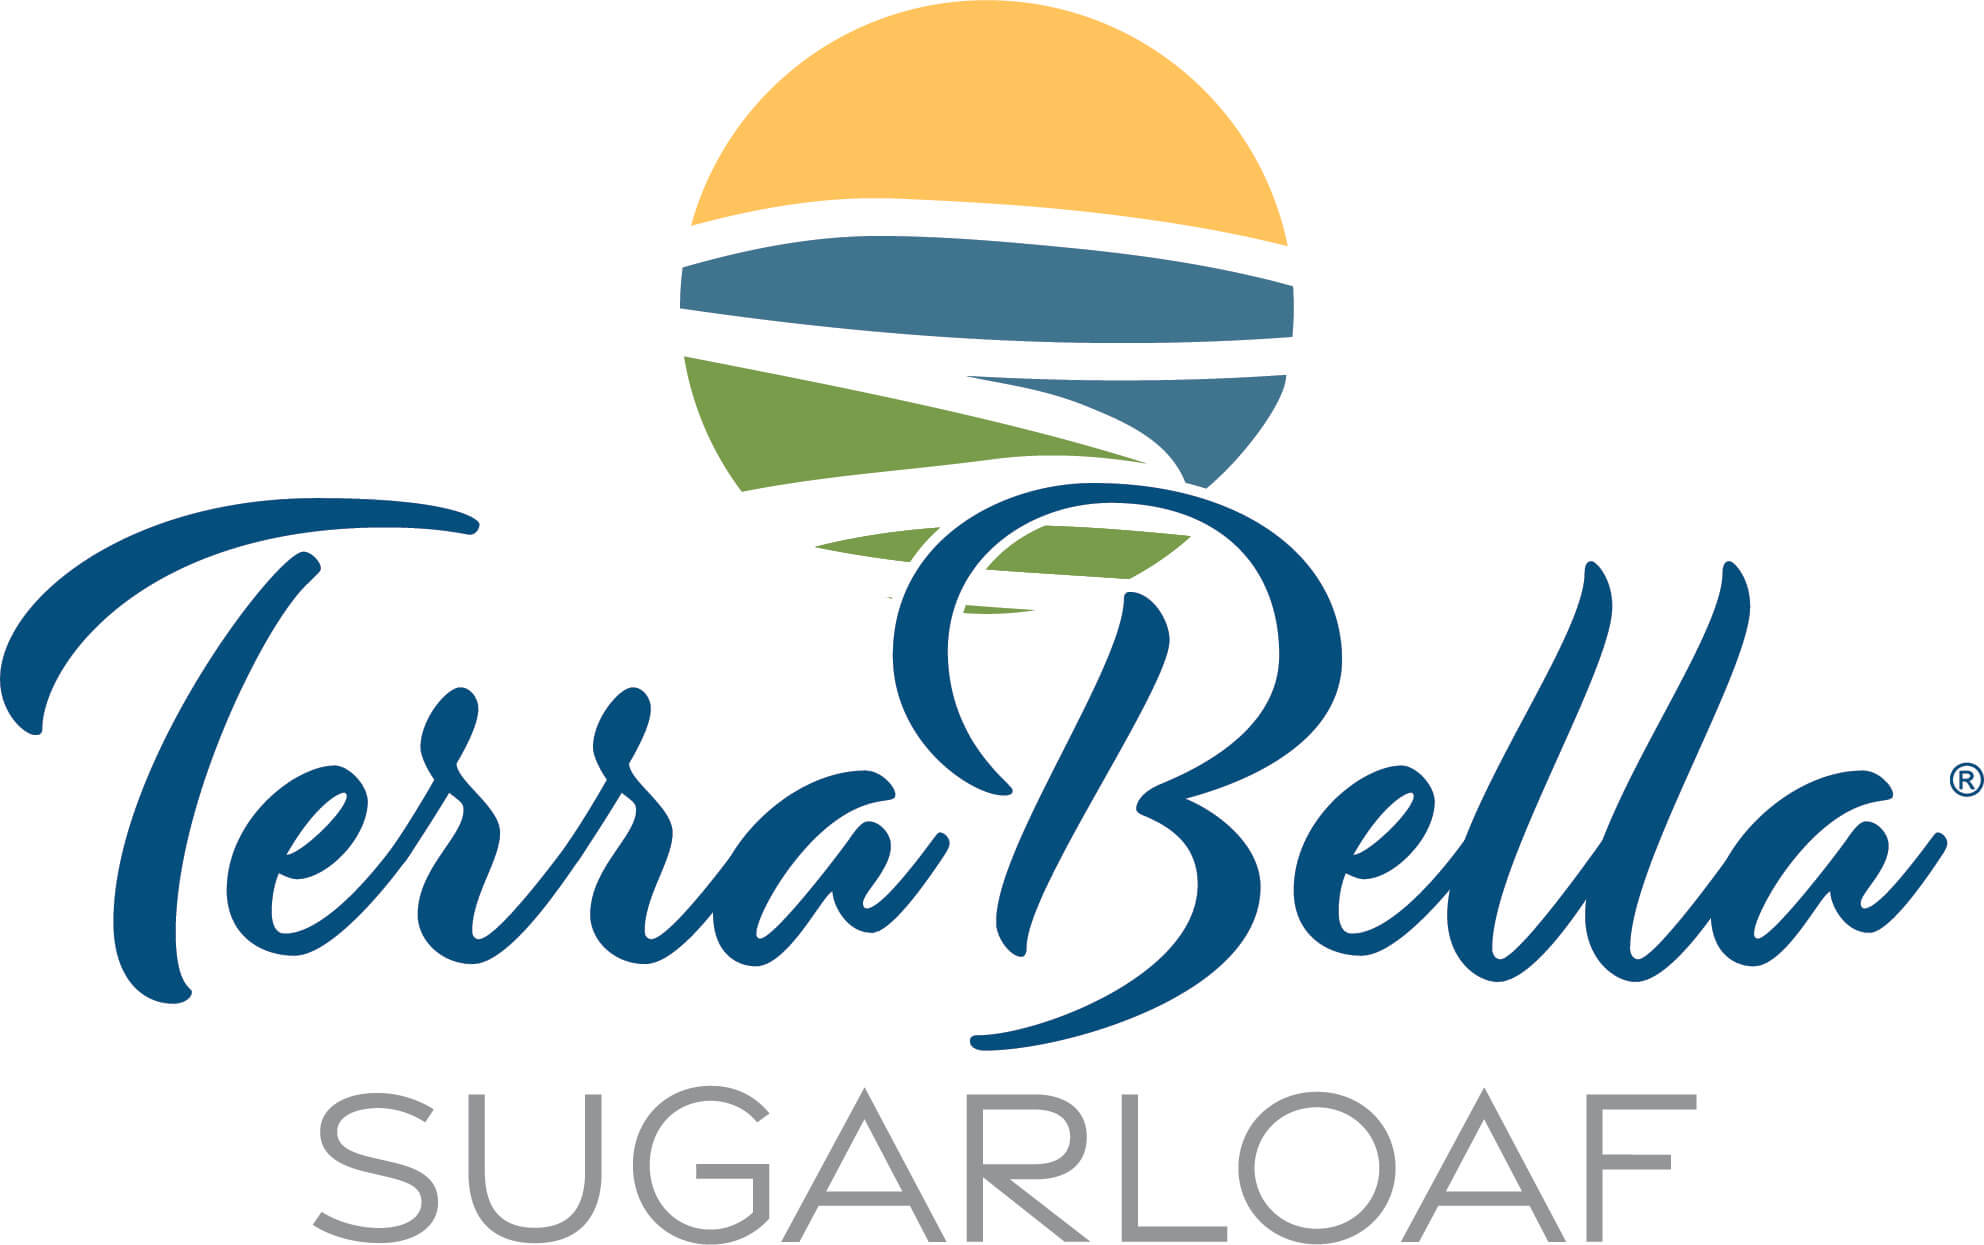 TerraBella Sugarloaf logo